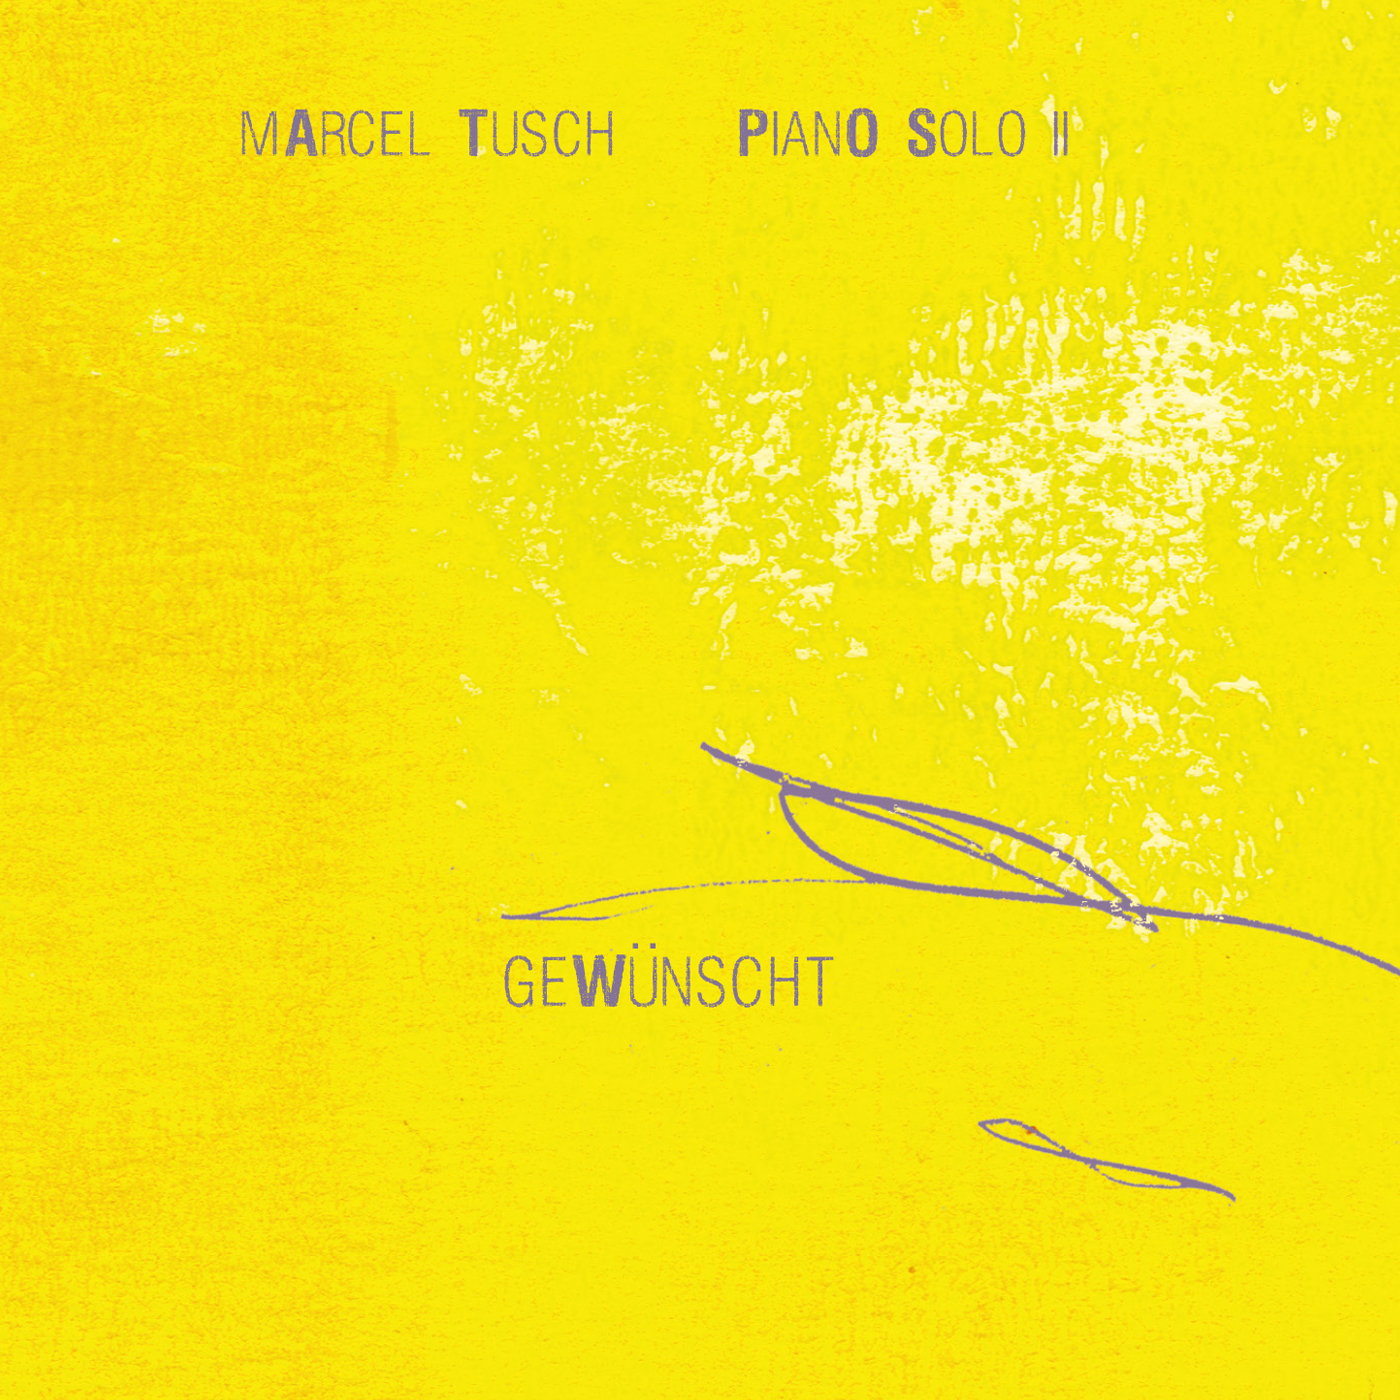 Gewünscht - Marcel Tusch Piano Solo II Cover (Vorderseite)